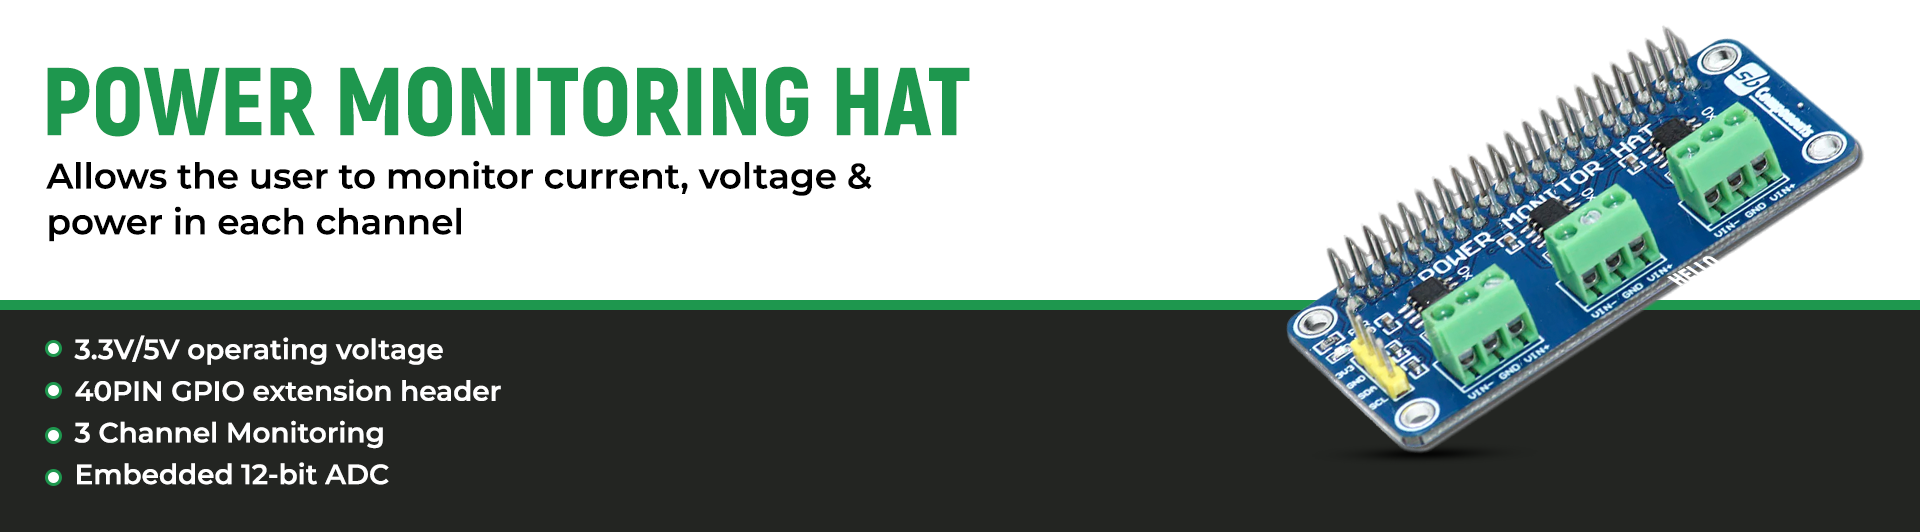 Power Monitoring HAT for Raspberry Pi